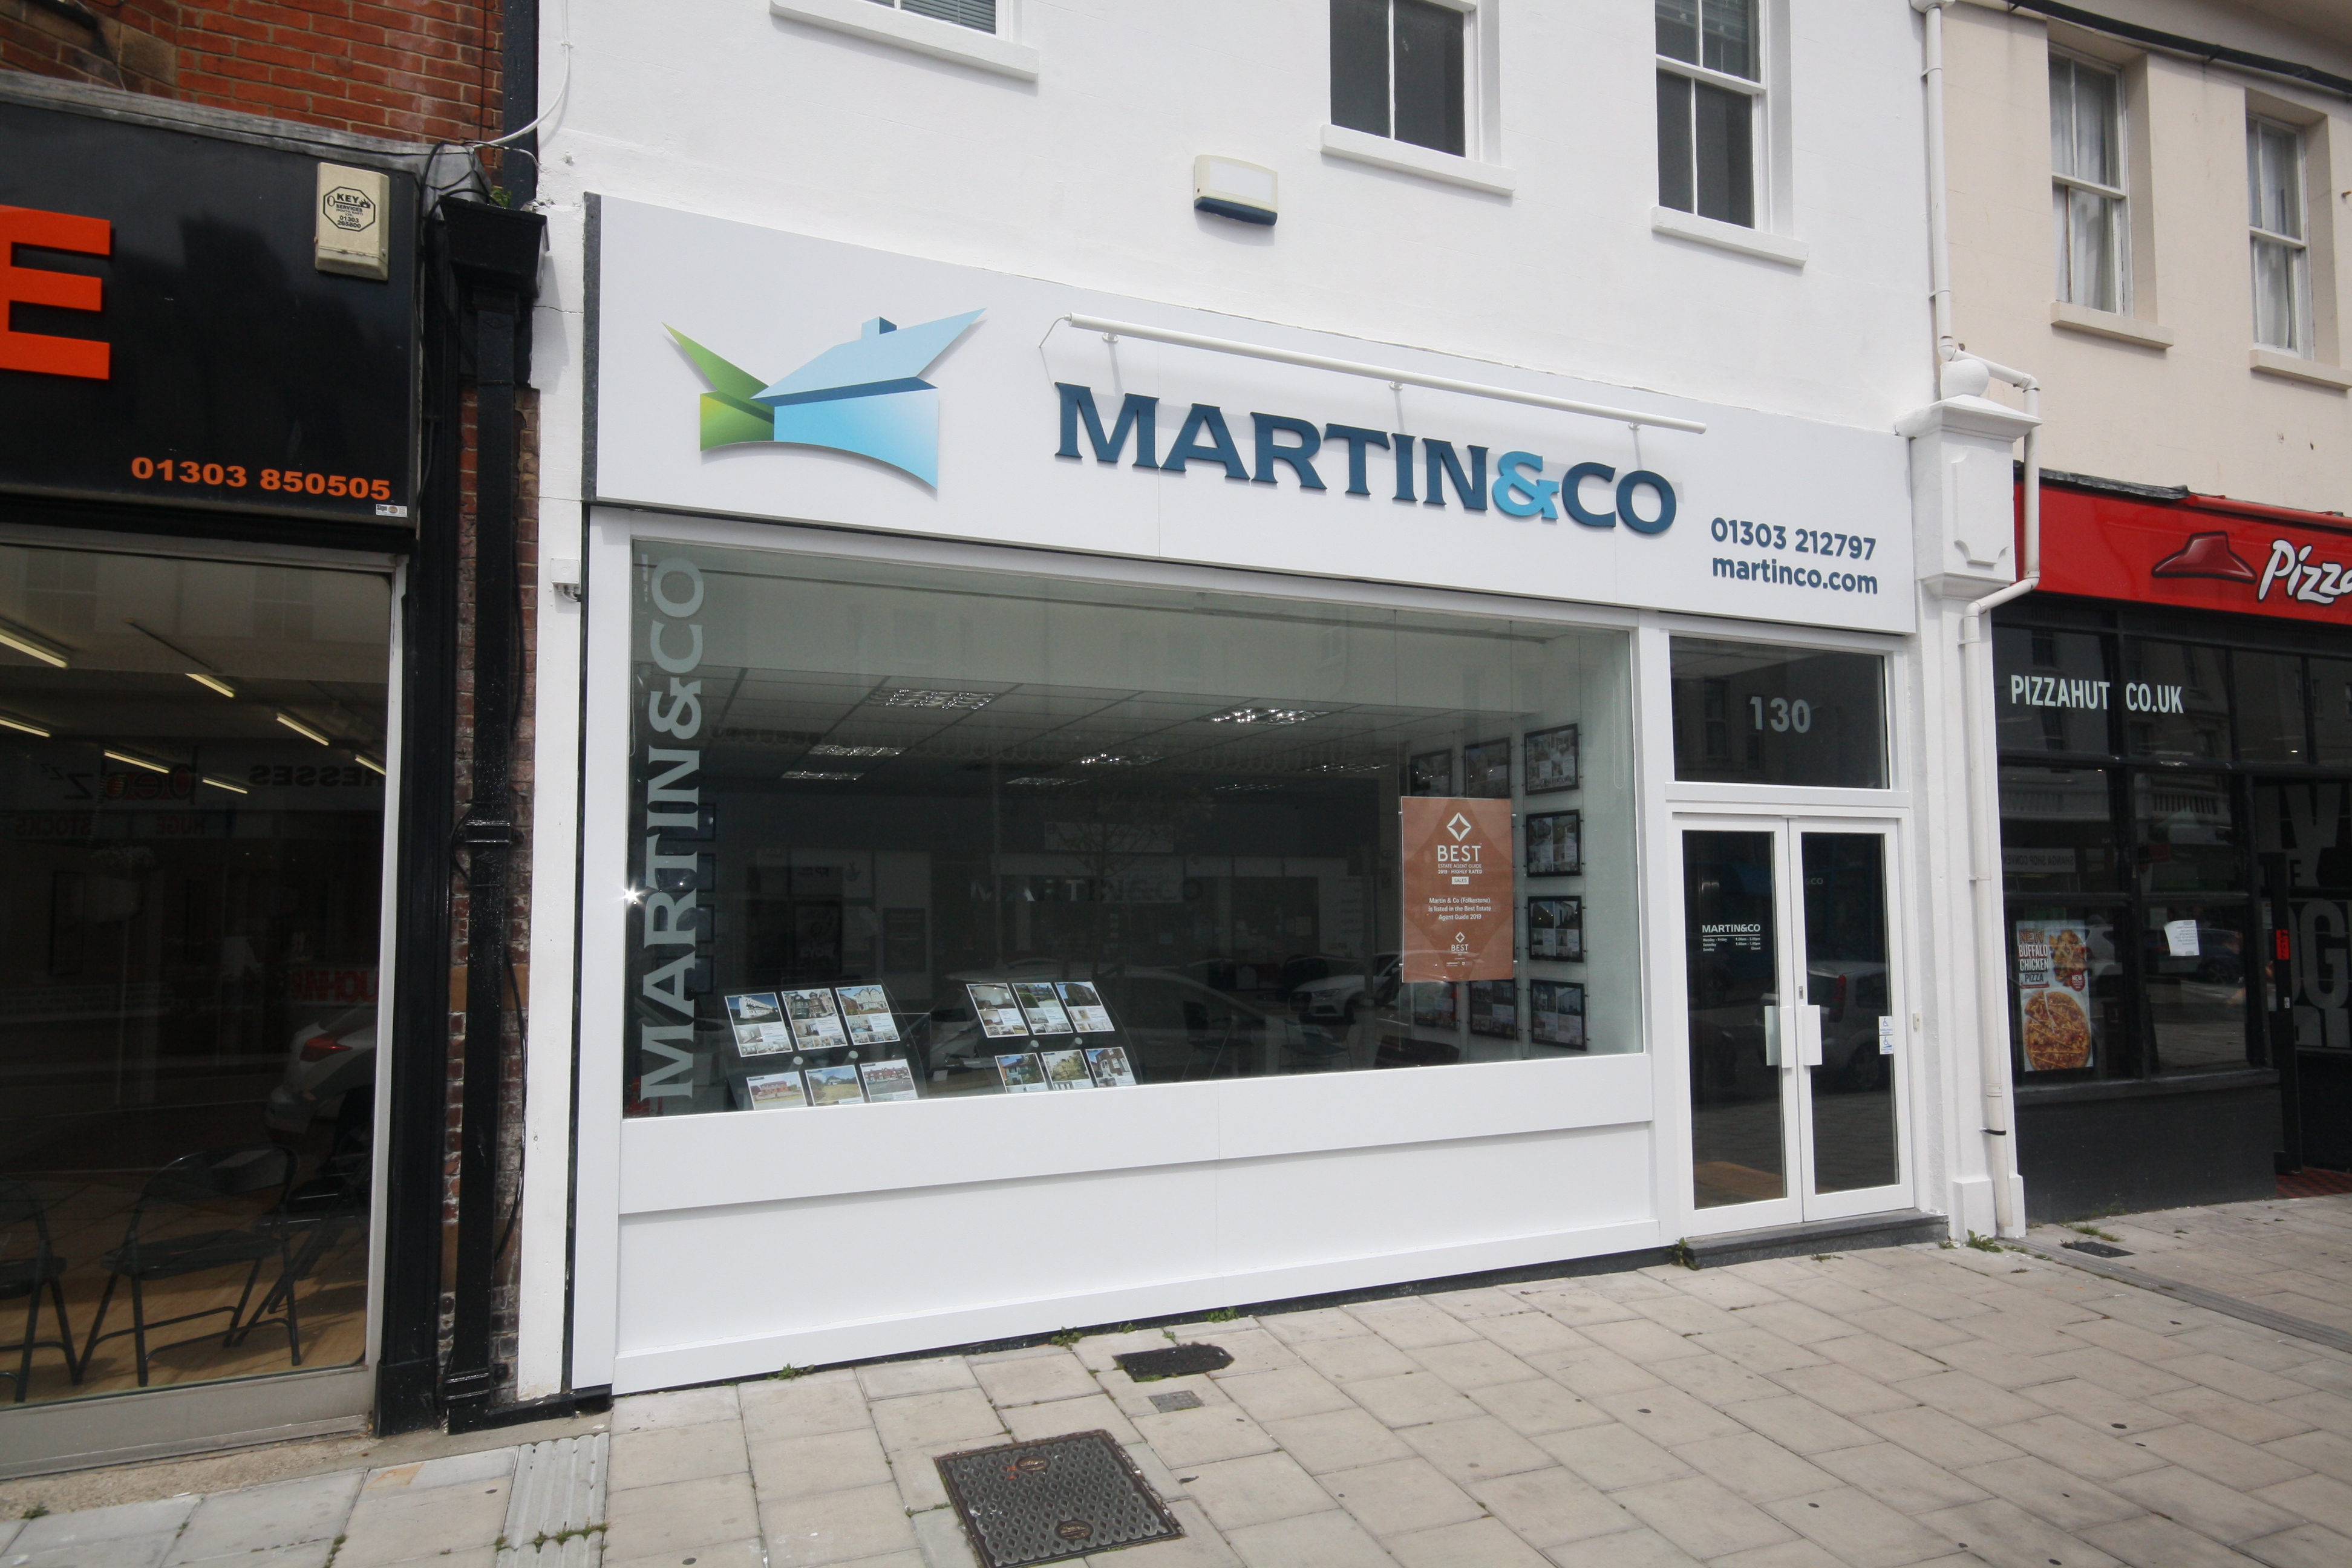 Martin & Co Folkestone Lettings & Estate Agents Folkestone 01303 212797